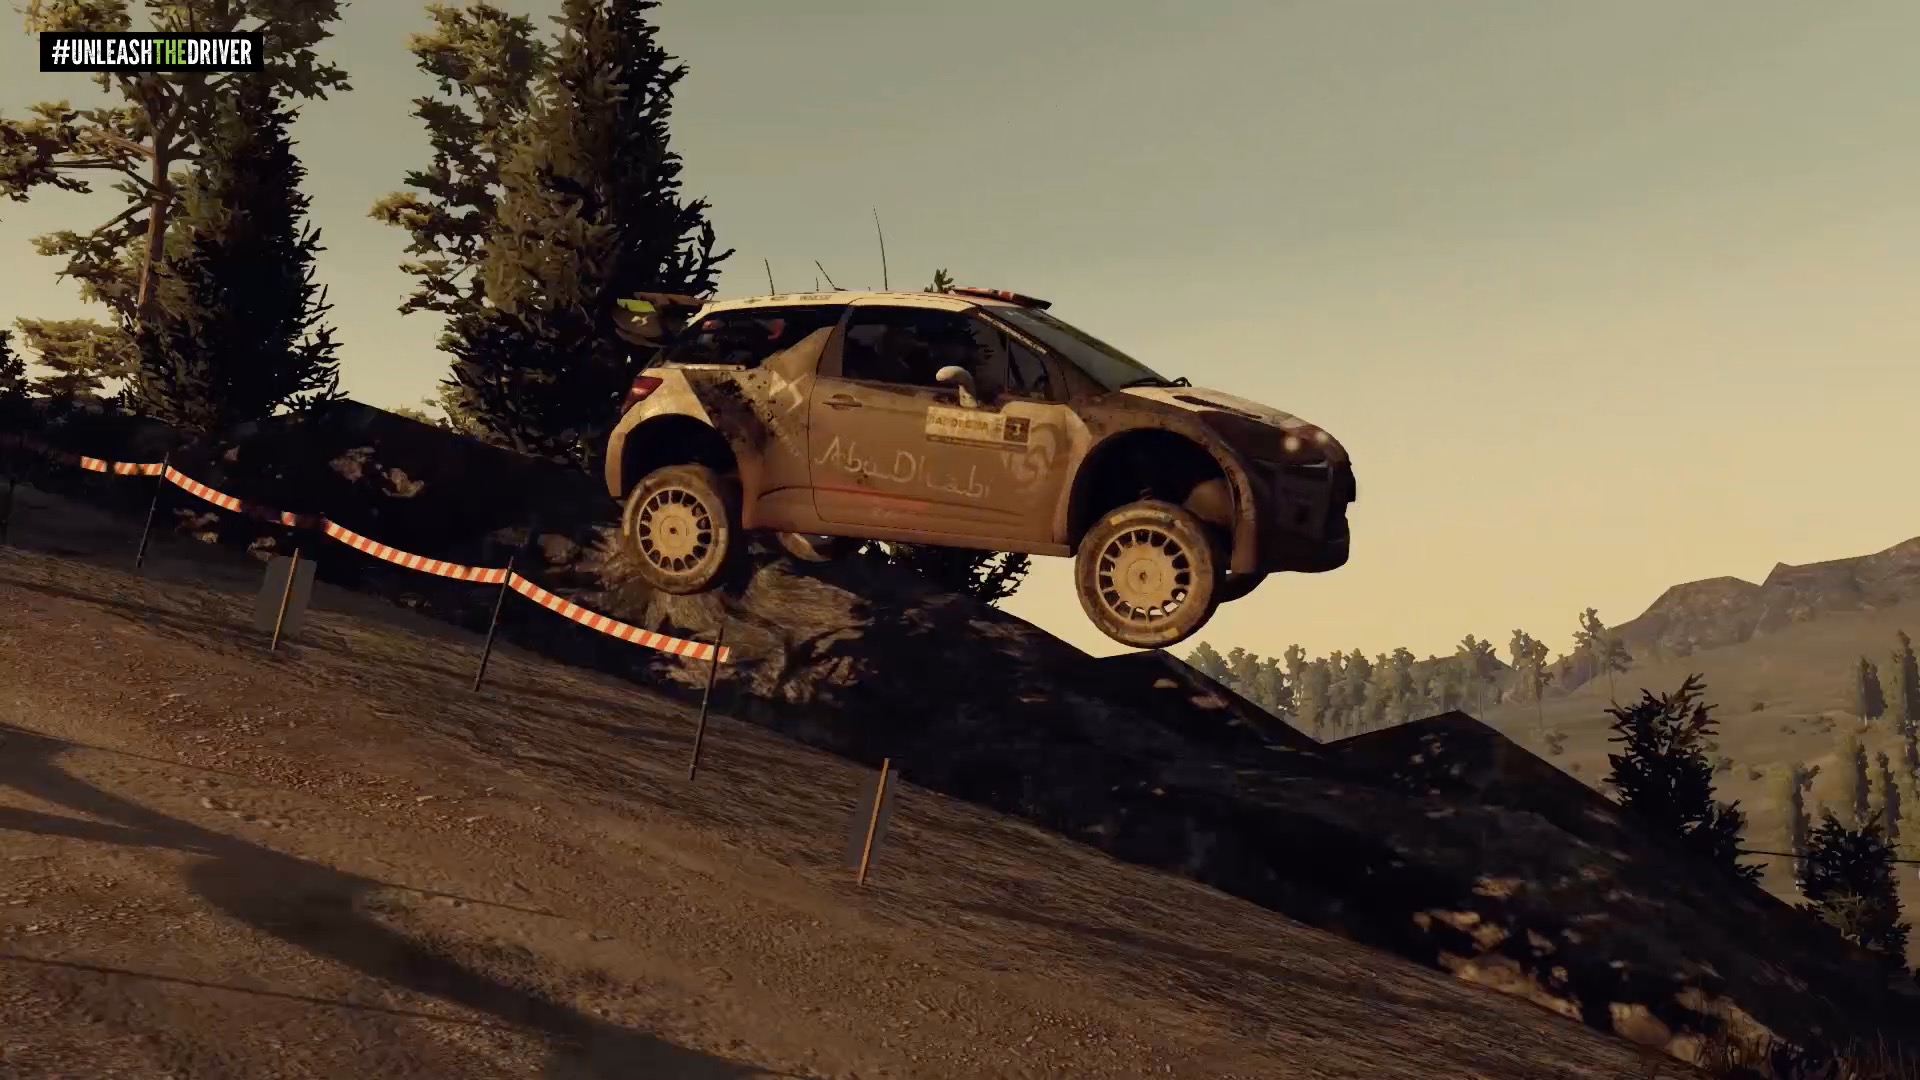 WRC 5 gameplay looks photo-realistic